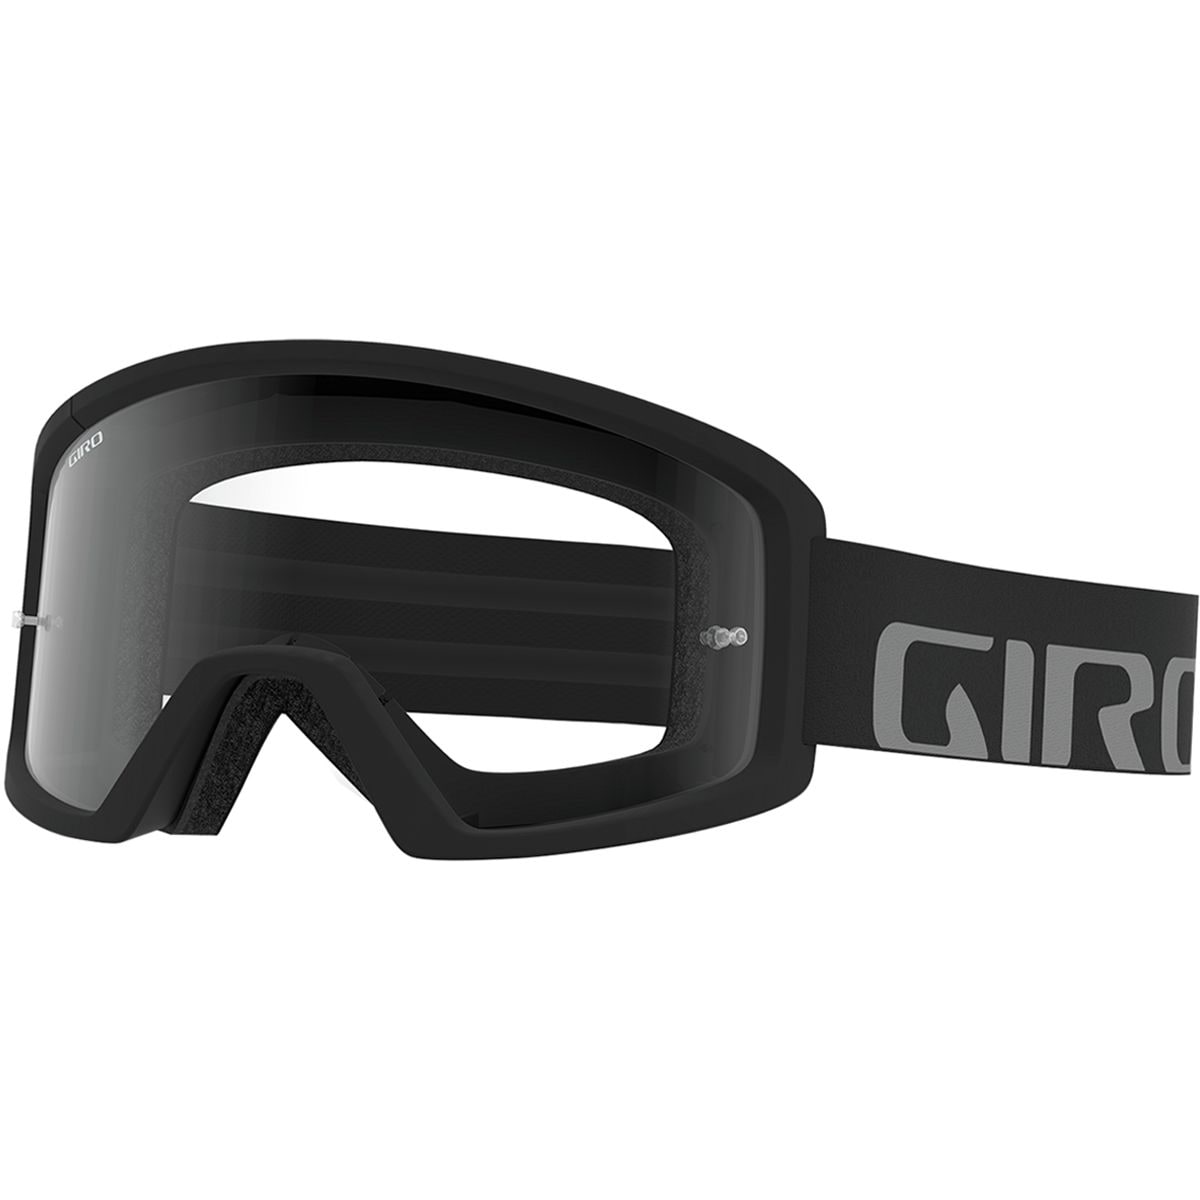 Giro Tazz MTB Goggles Black/Grey, One Size